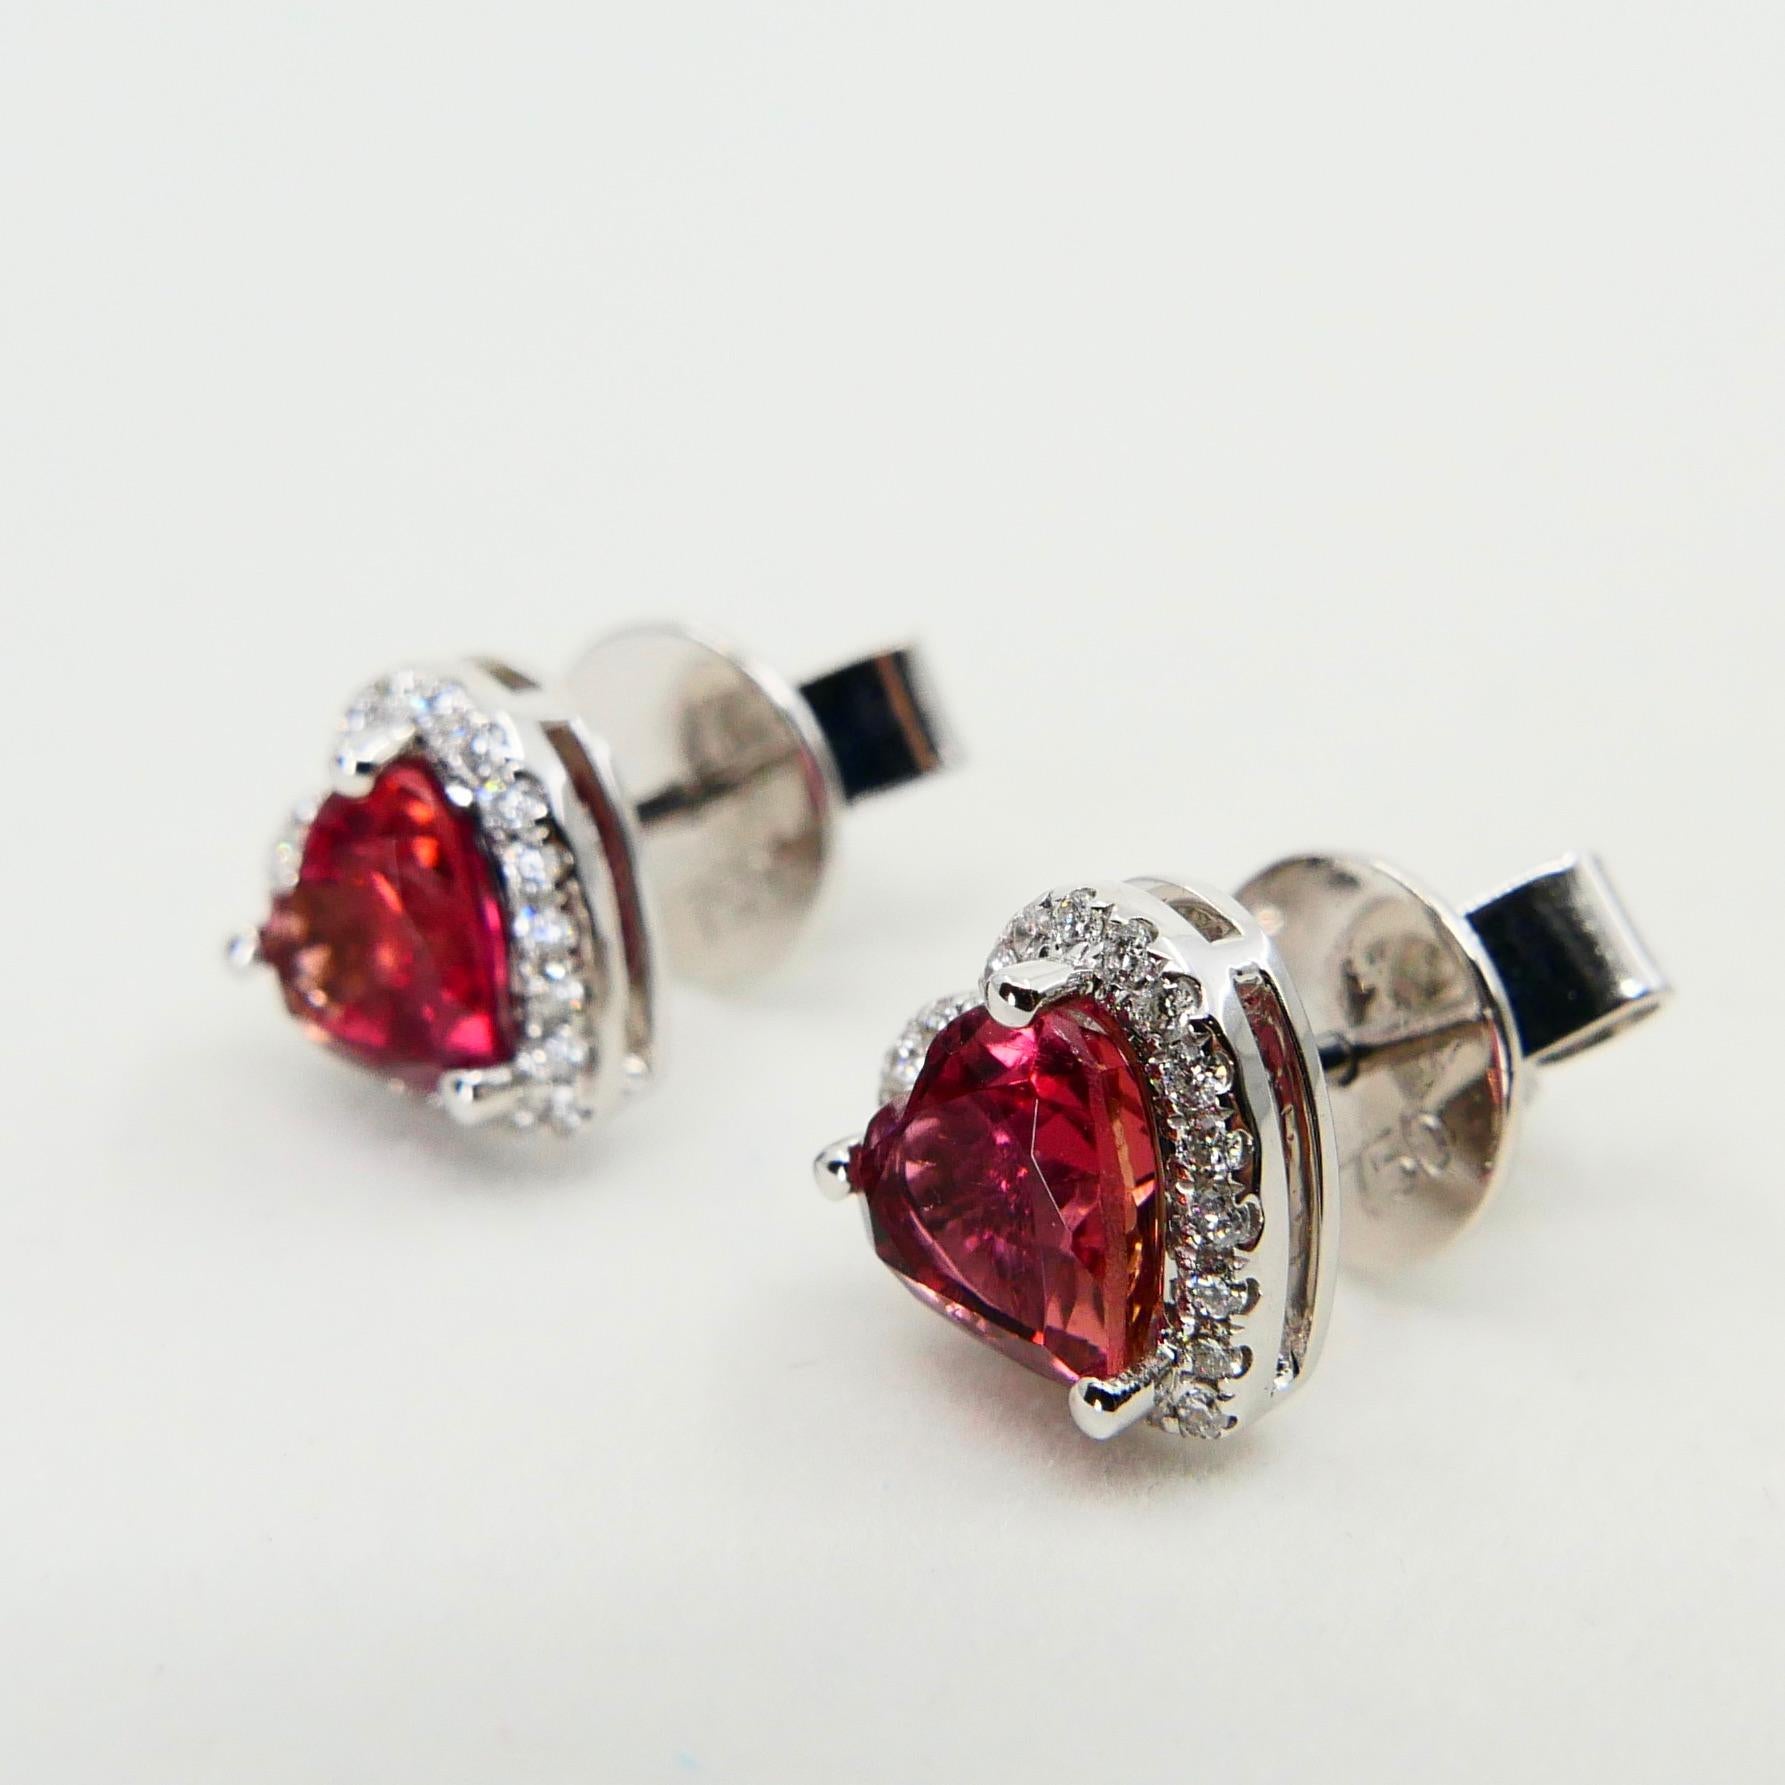 1.37 Carat Heart Shaped Vivid Pink Tourmaline and Diamond Stud Earring For Sale 1